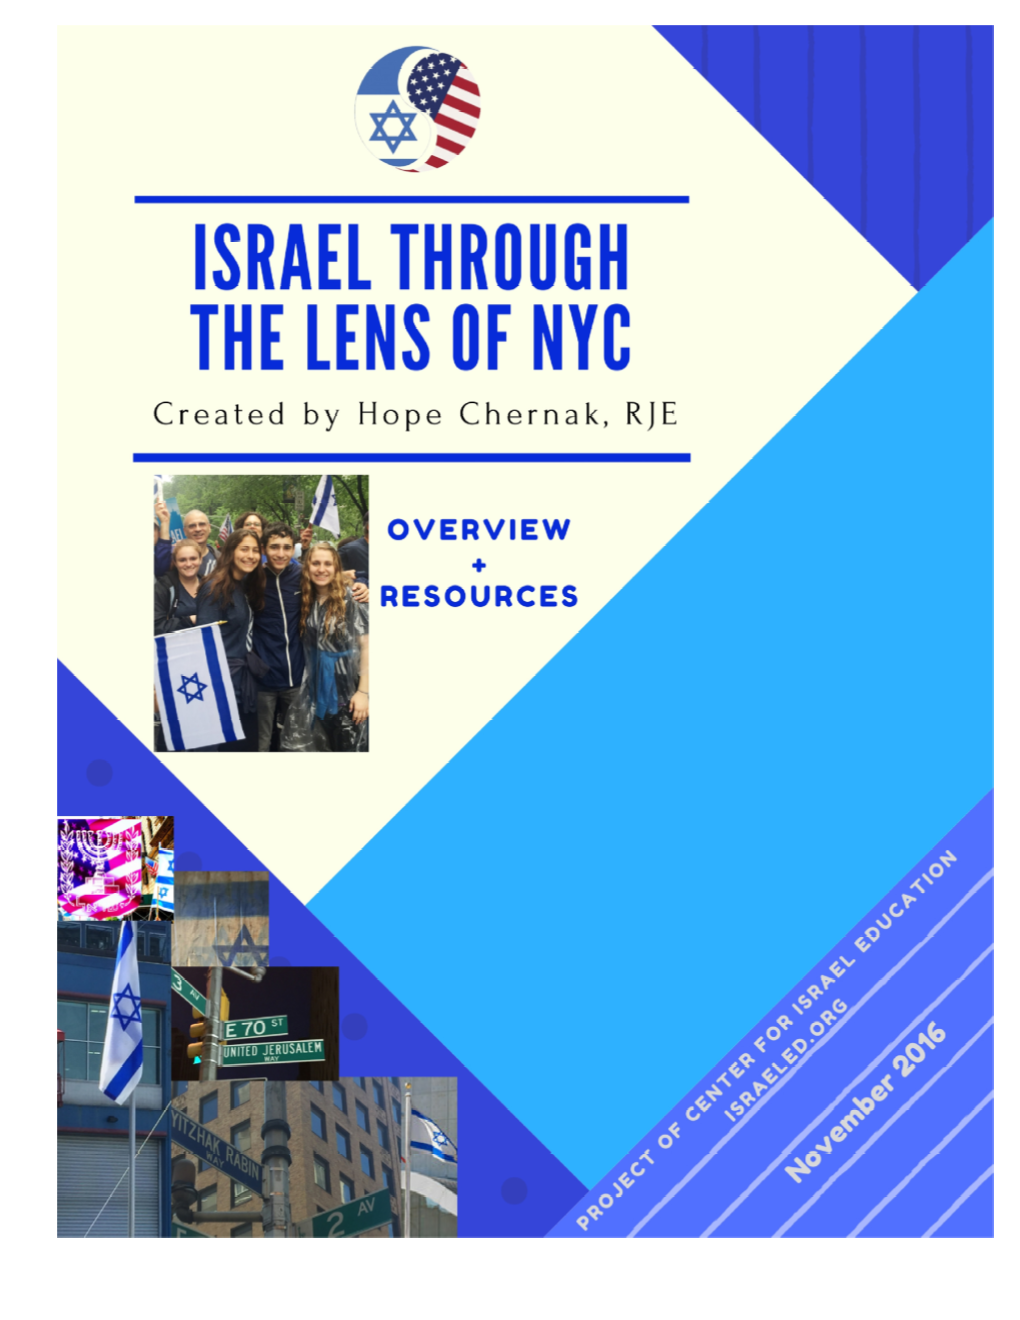 Israel Through the Lens of New York City